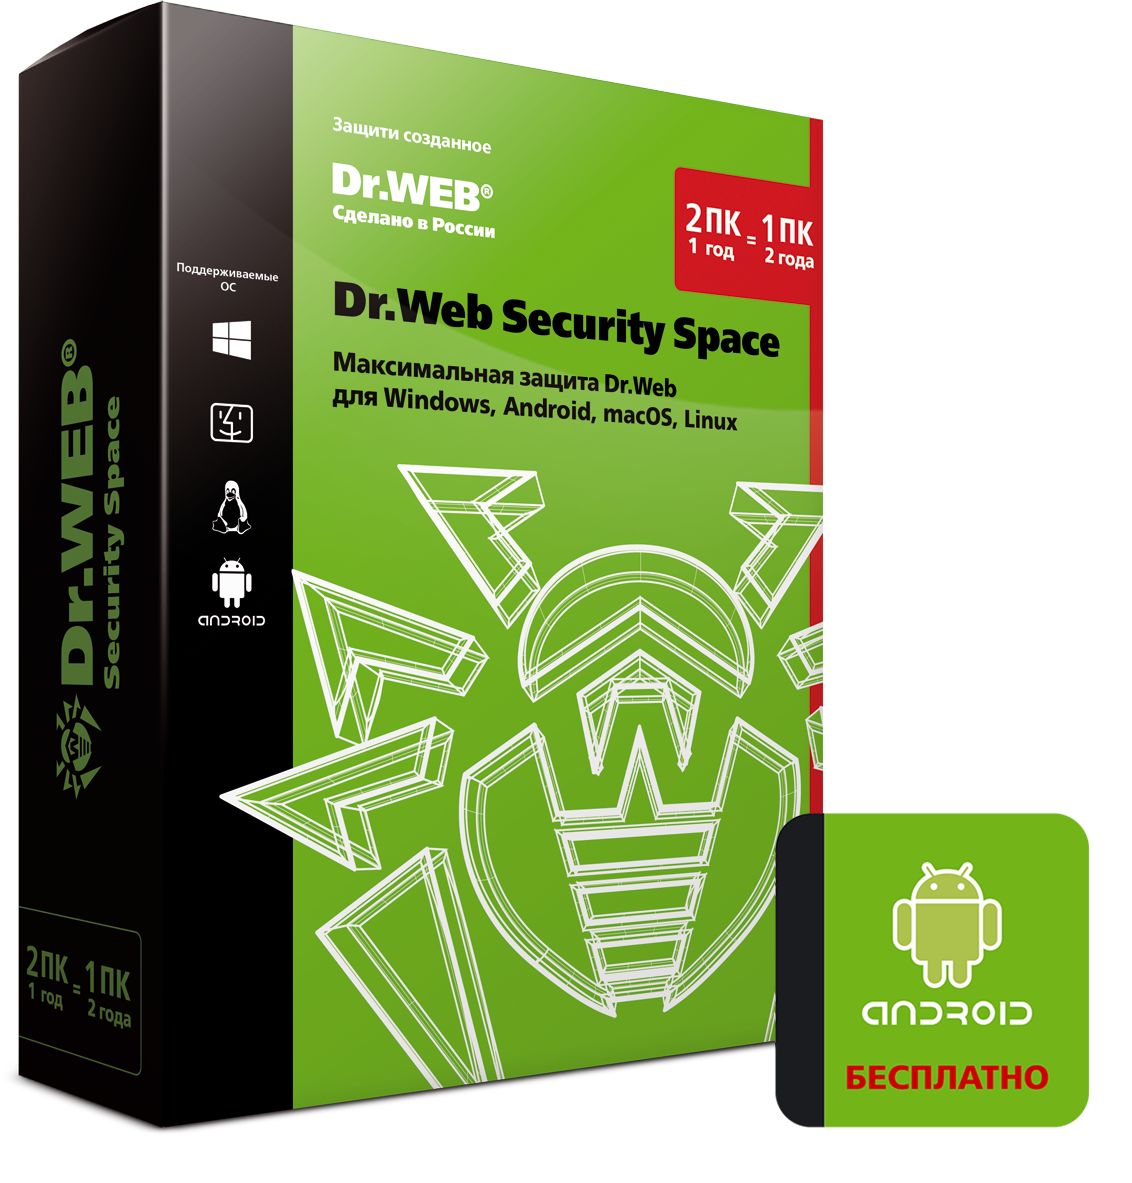 Антивирус Dr.Web Security Space на 1 год на 2 ПК [BHW-B-12M-2-A3] (Box) антивирус drweb security space на 1 год на 2 пк [lhw bk 12m 2 a3] электронный ключ